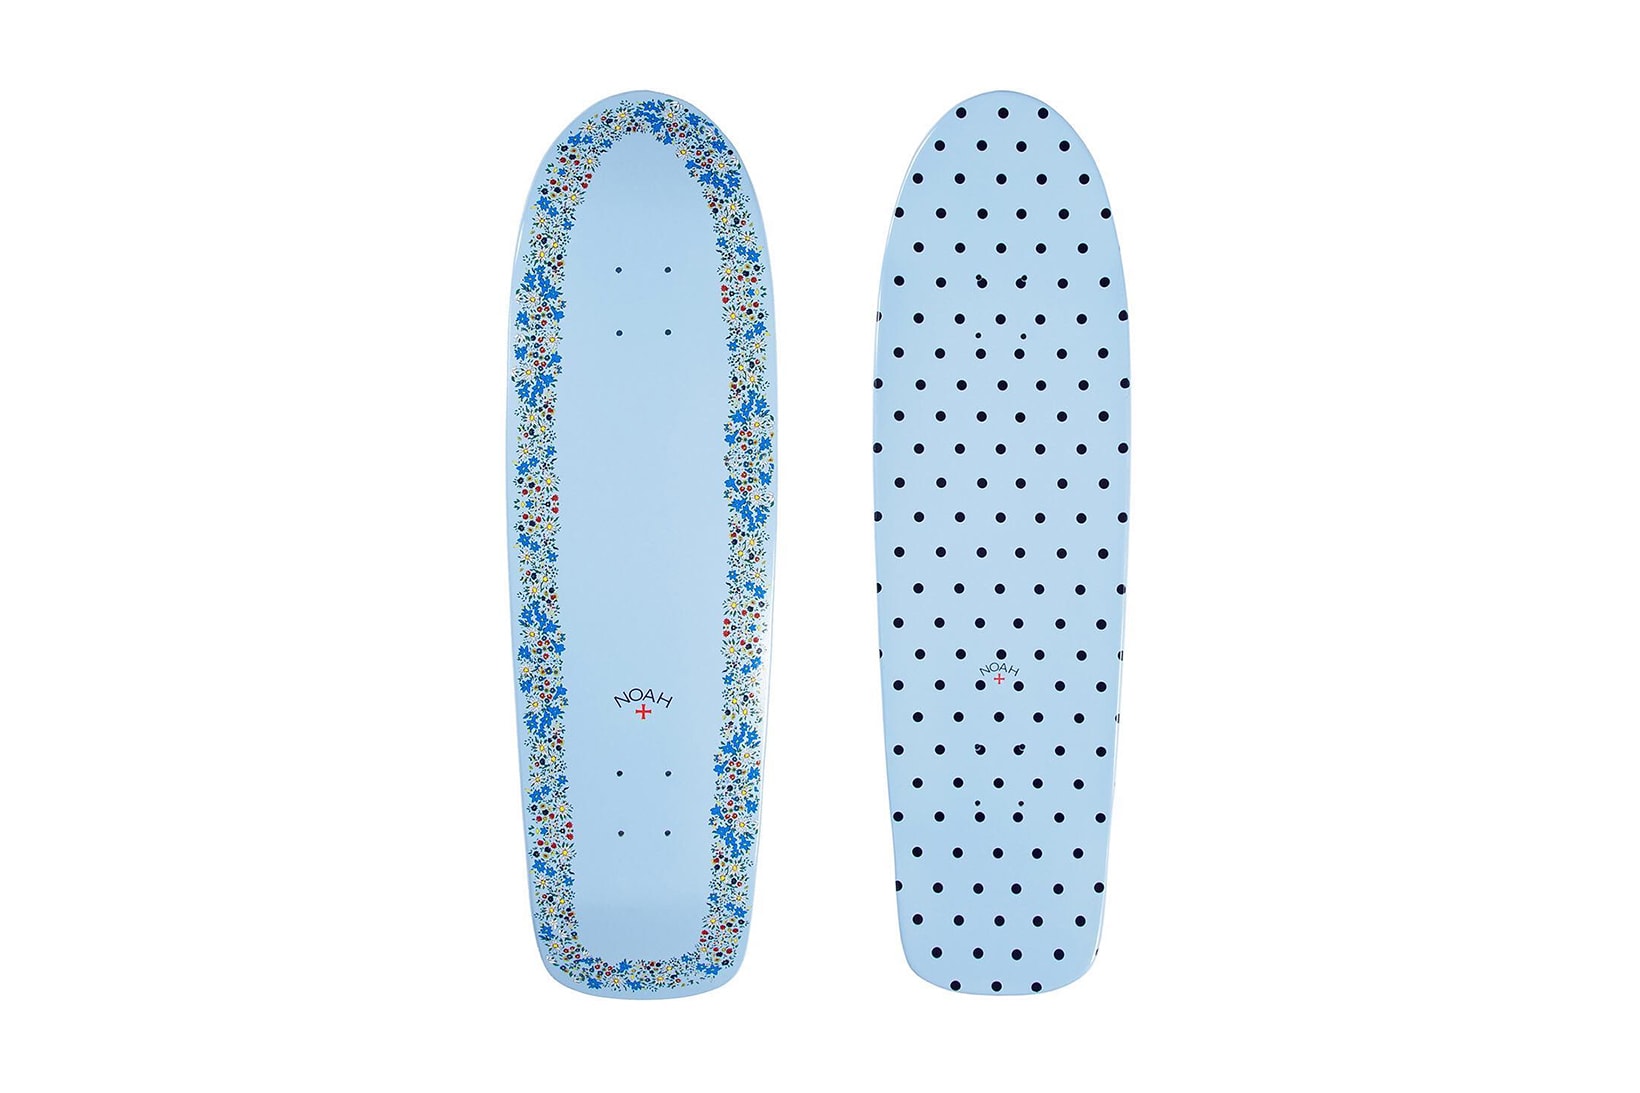 Noah First Skate Deck 2017 Fall Skateboard Blue USA Floral Flowers Polka Dots Pattern